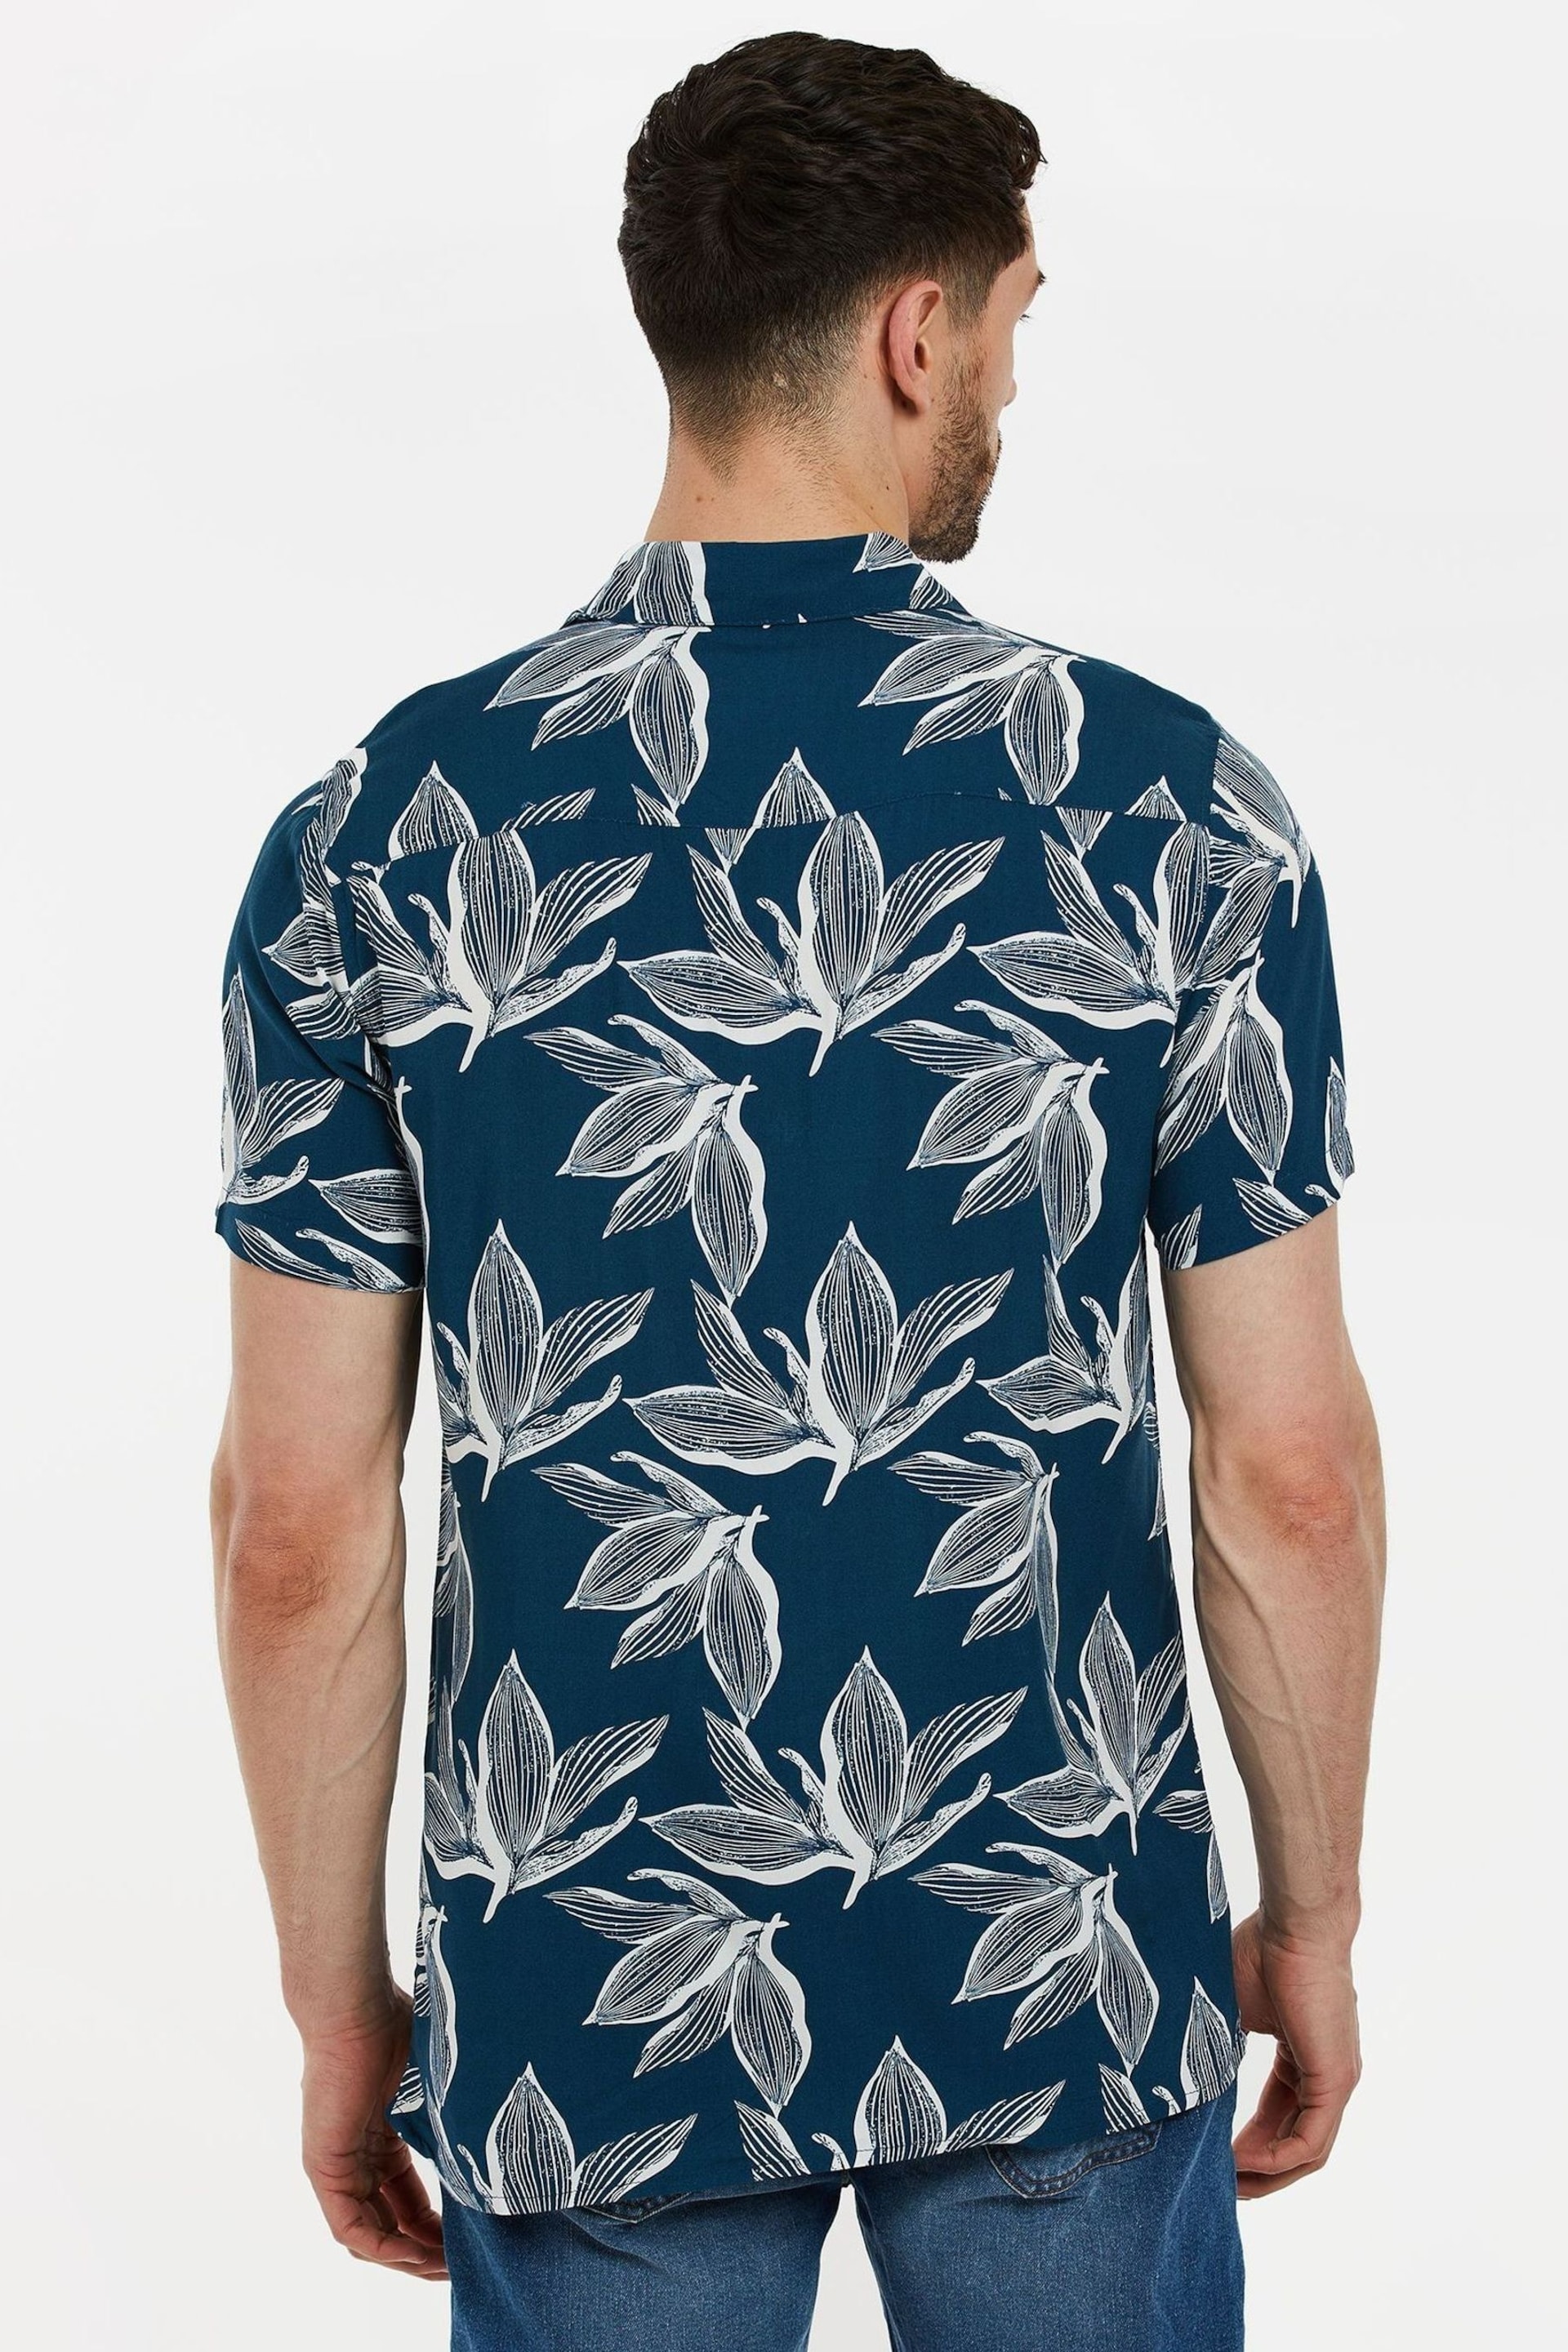 Threadbare Navy Blue Cotton Tropical Print Short Sleeve Shirt - Image 2 of 6